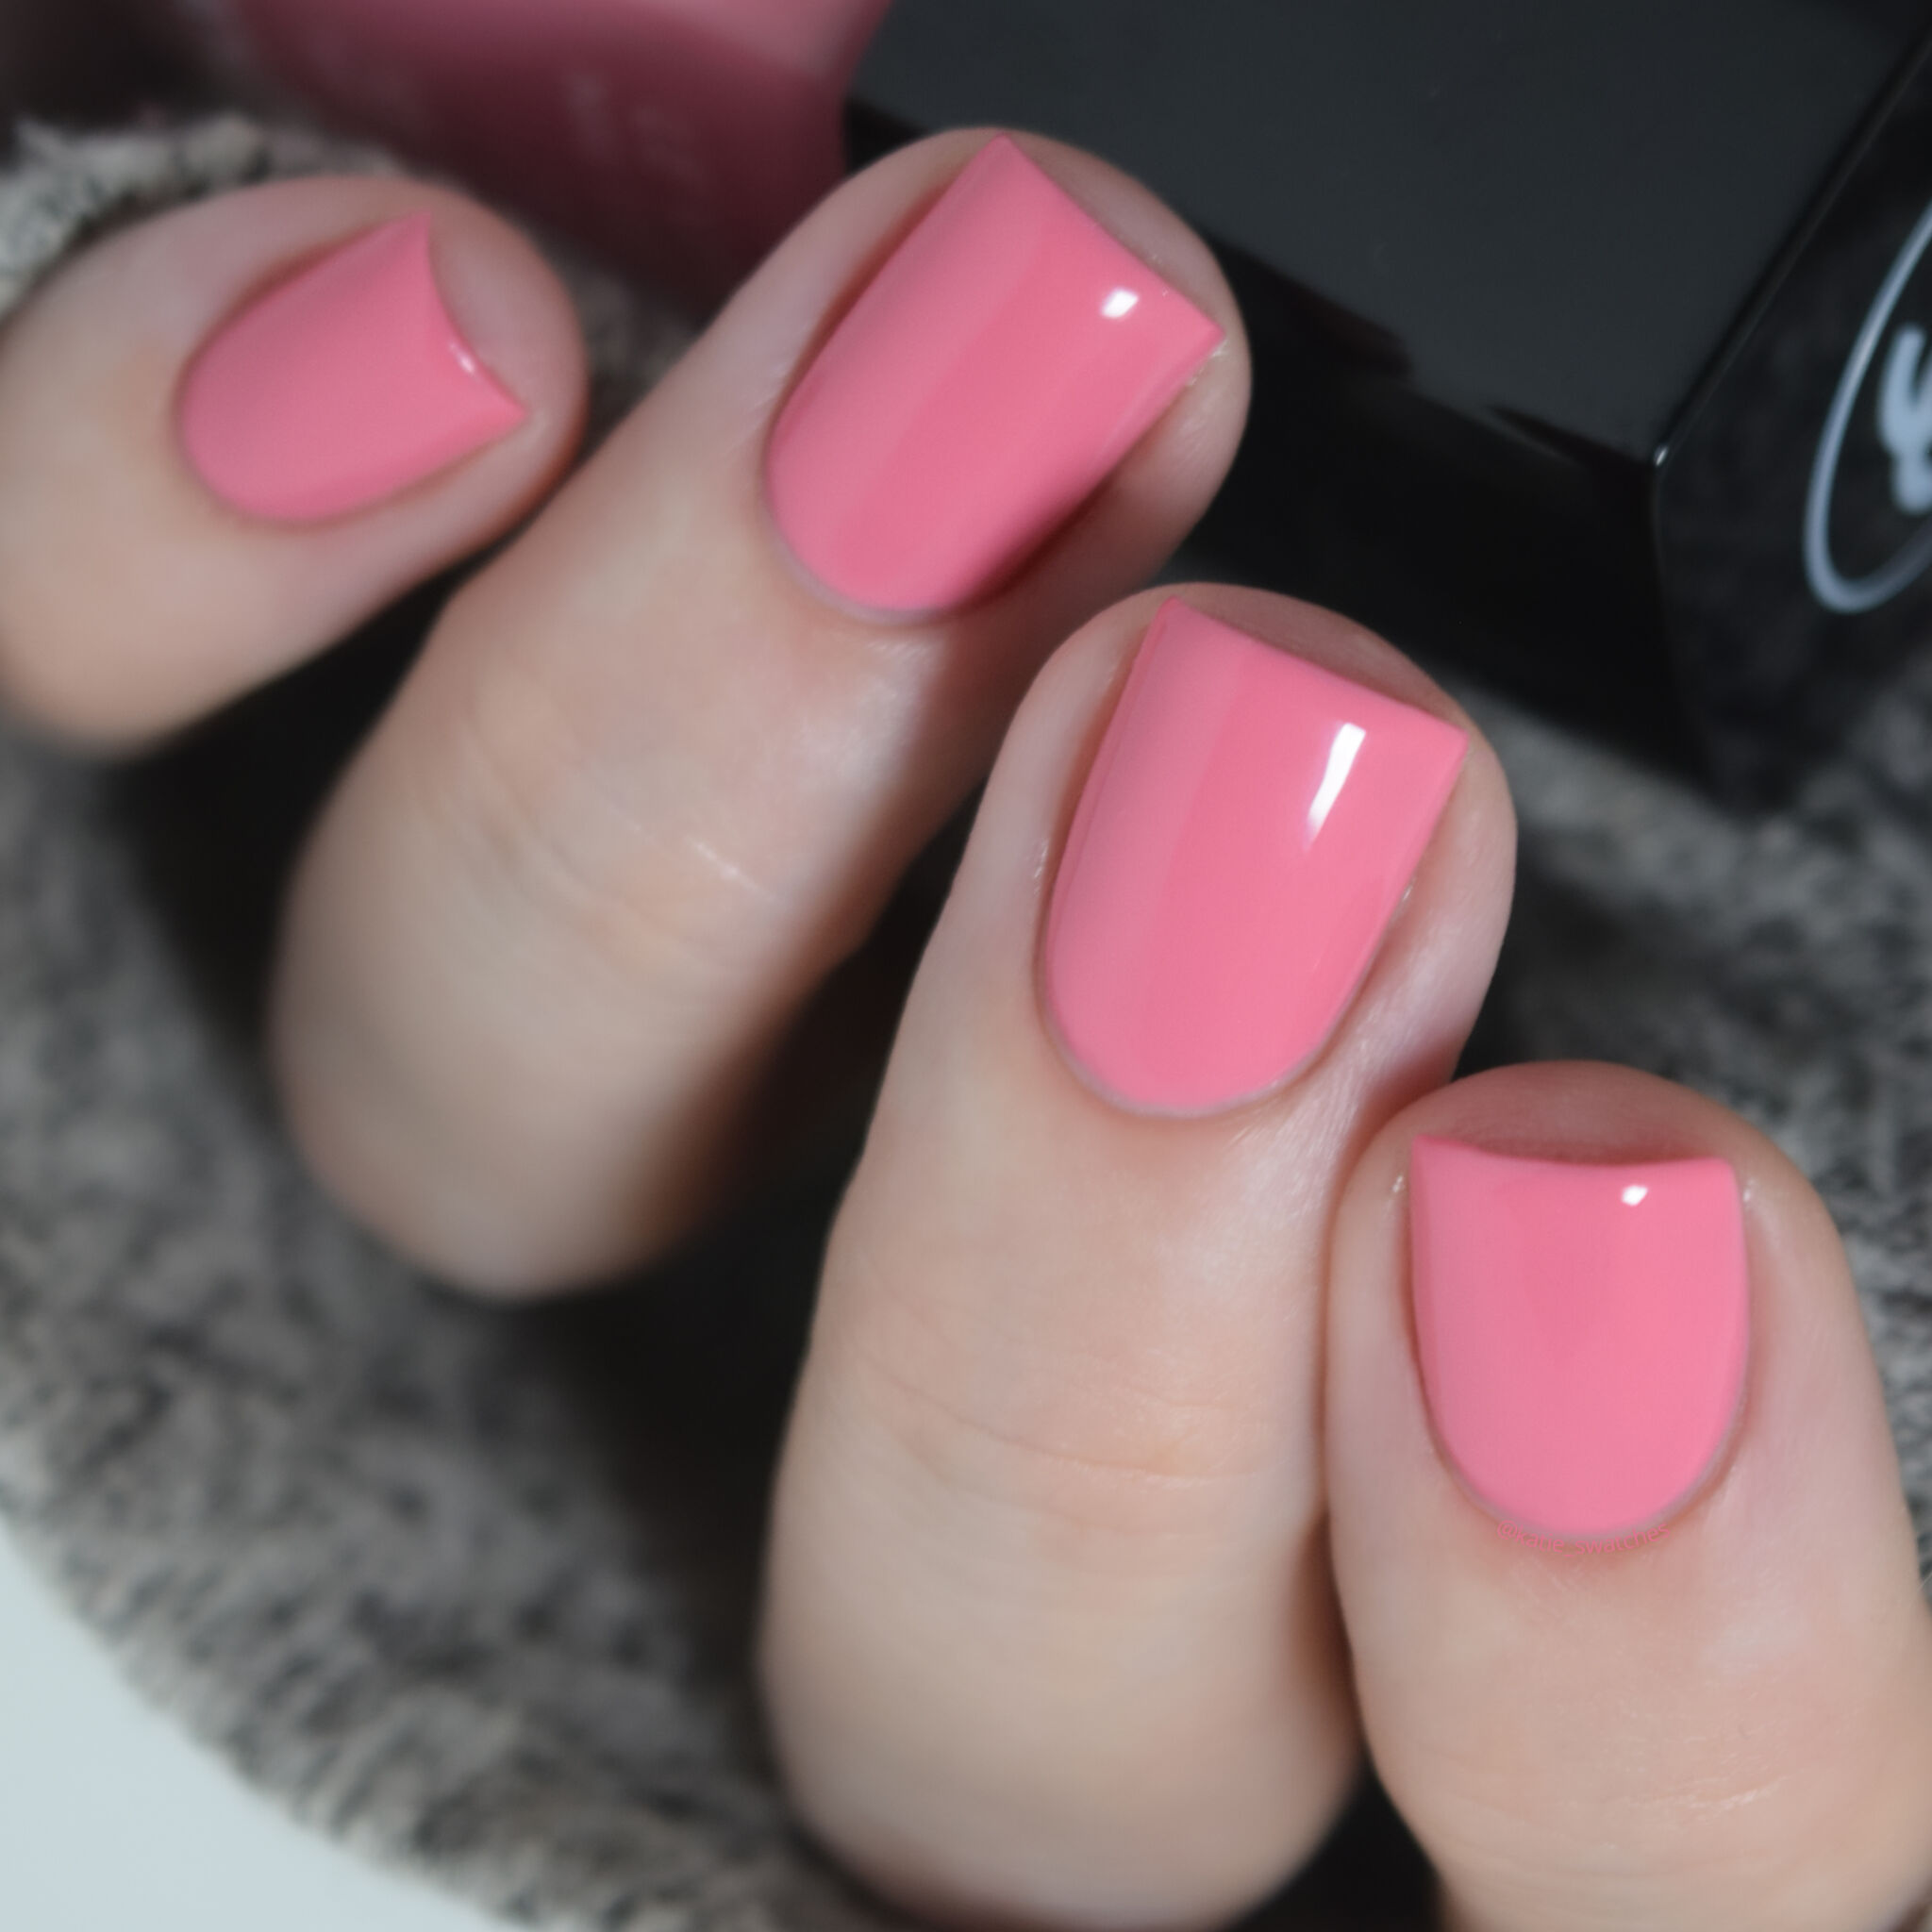 Chanel Nail Colour May 535 bubblegum pink nail polish swatch. High-end nail polish cosmetics. Chanel Le Vernis